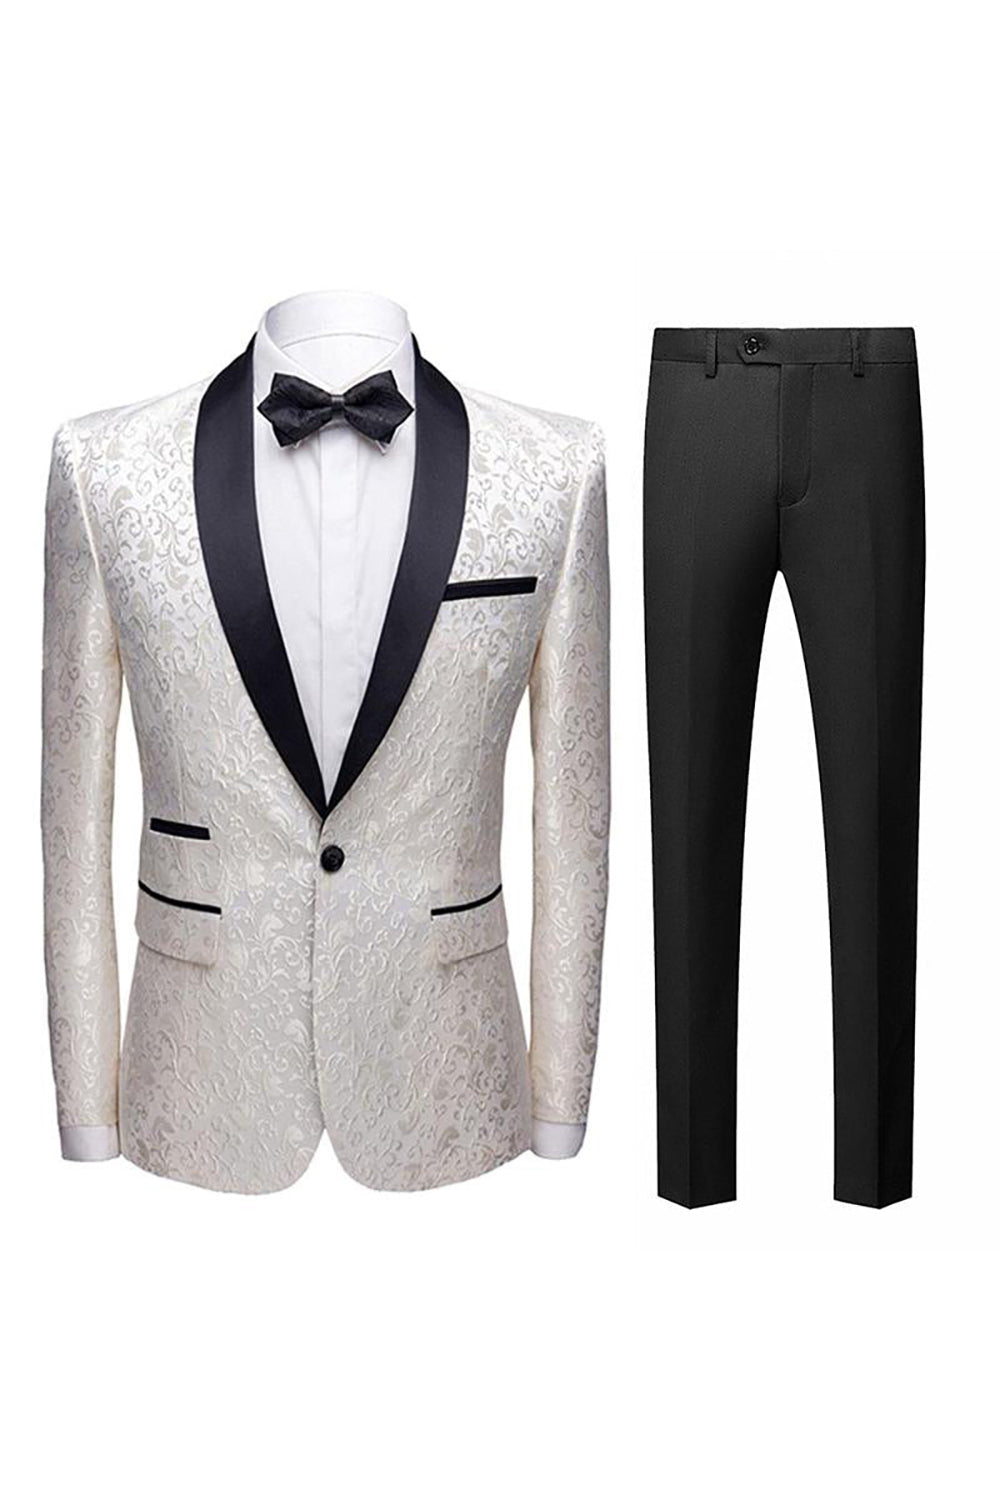 Zapaka Black Men's 2 Pieces Suits Jacquard Shawl Lapel Prom Homecoming ...